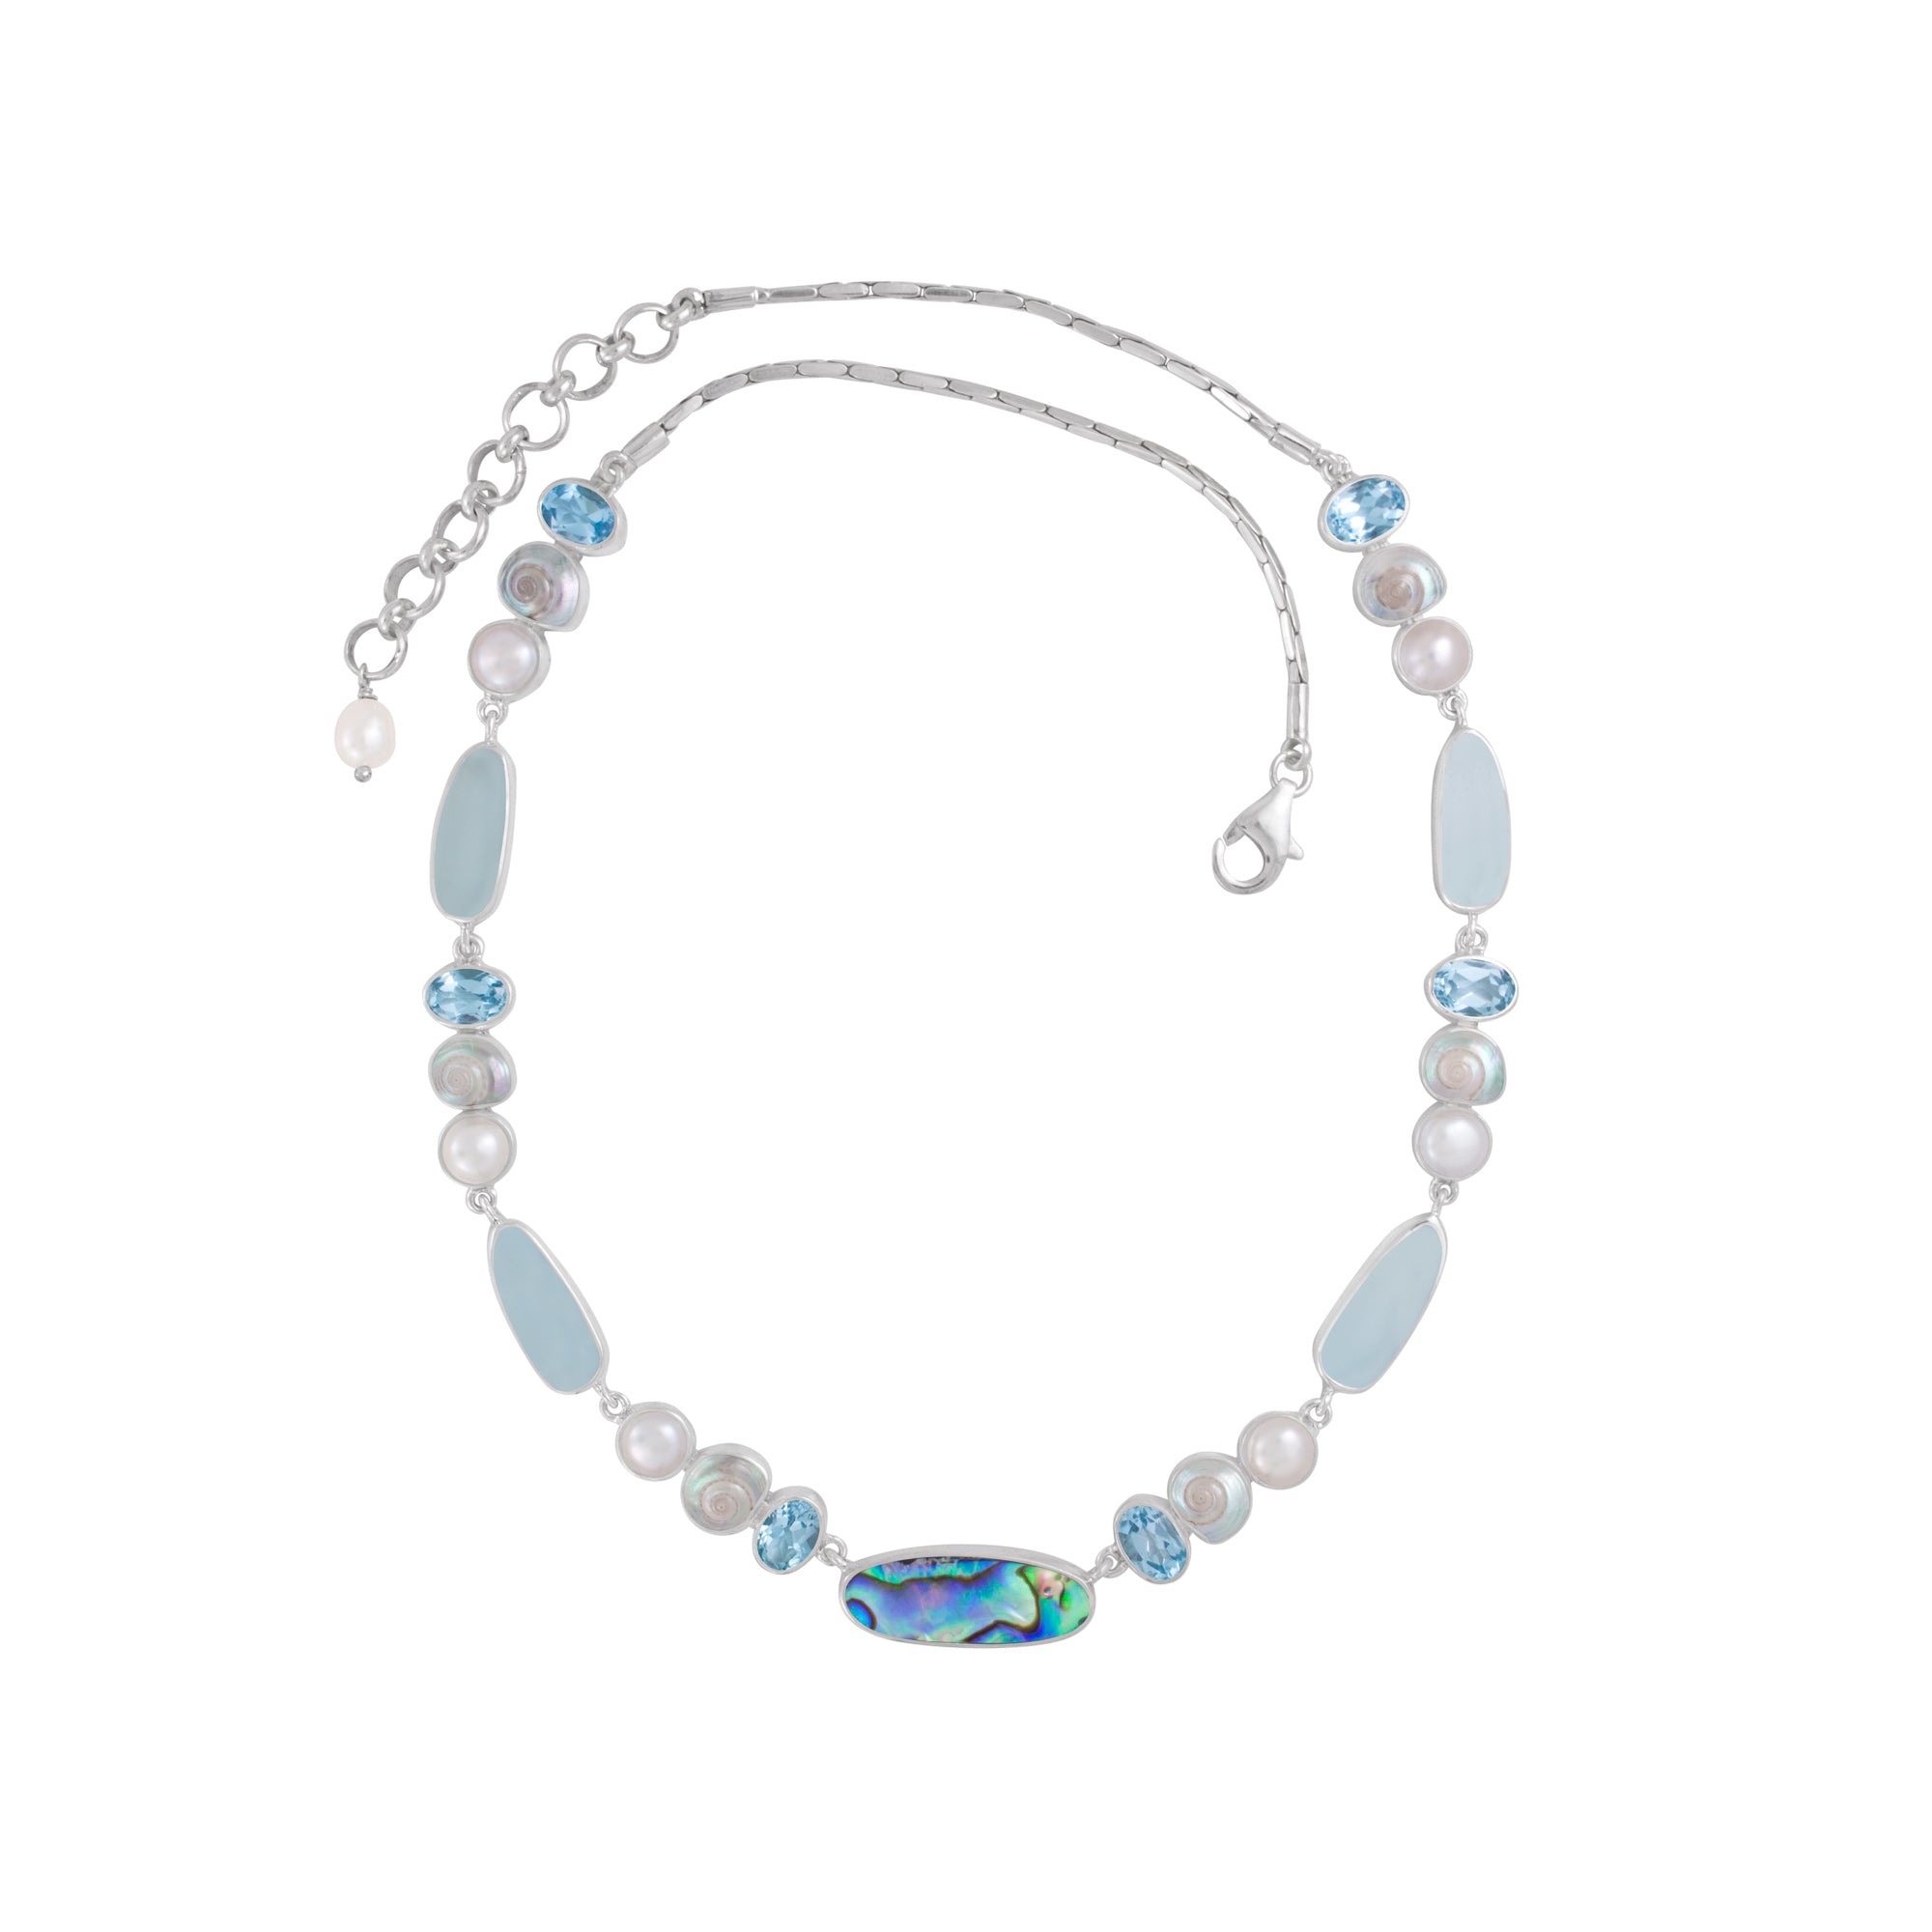 Stunning Nautilas Necklace with Paua Shell & Sea Glass